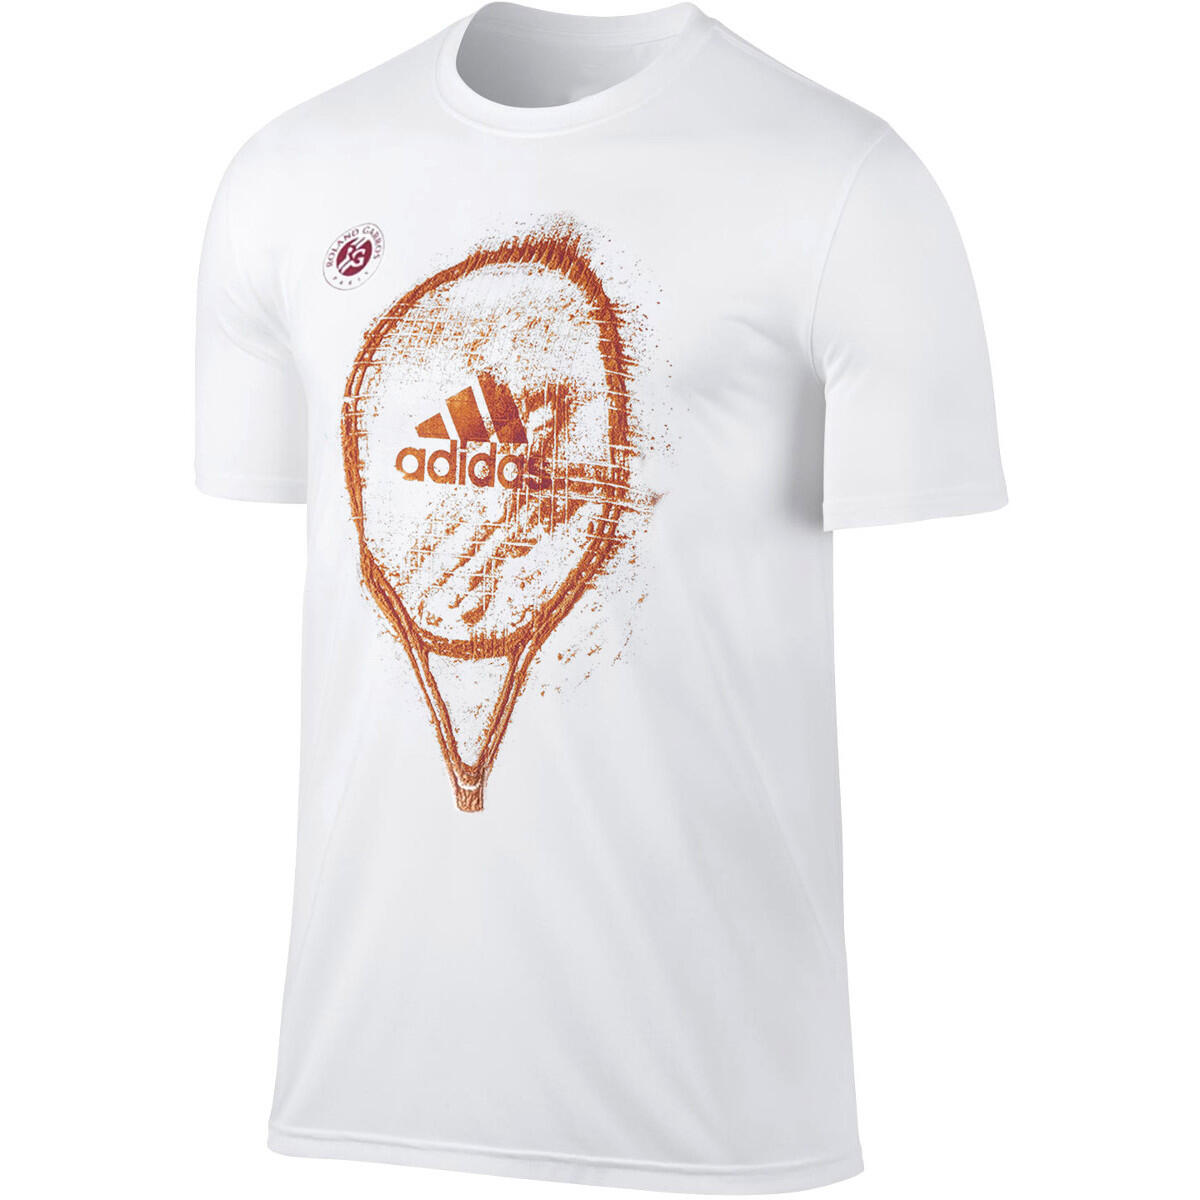 adidas t shirt tennis